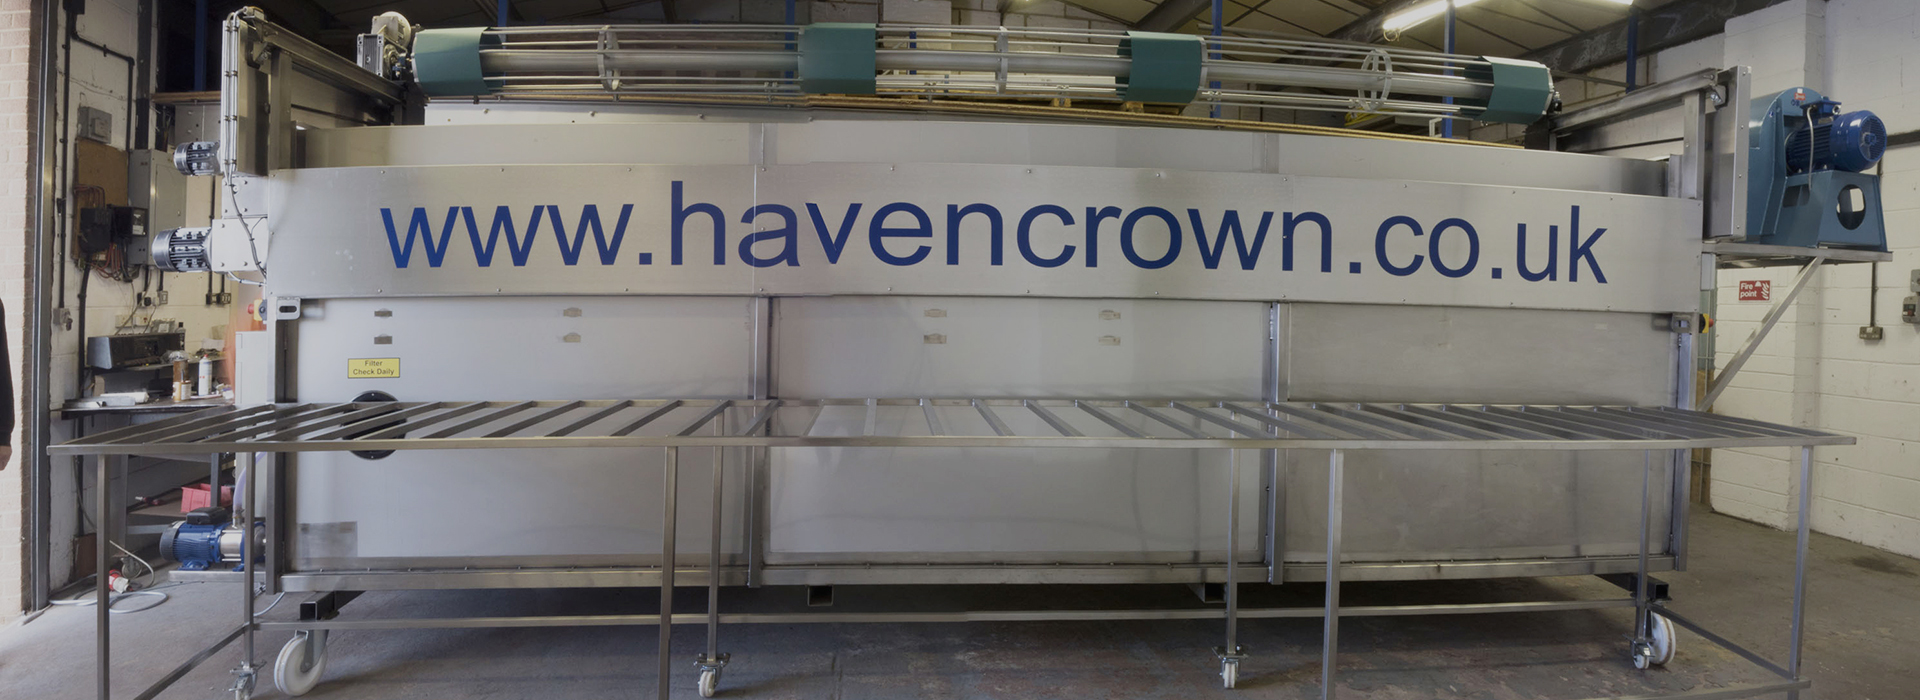 havencrown-slideshow-5.jpg